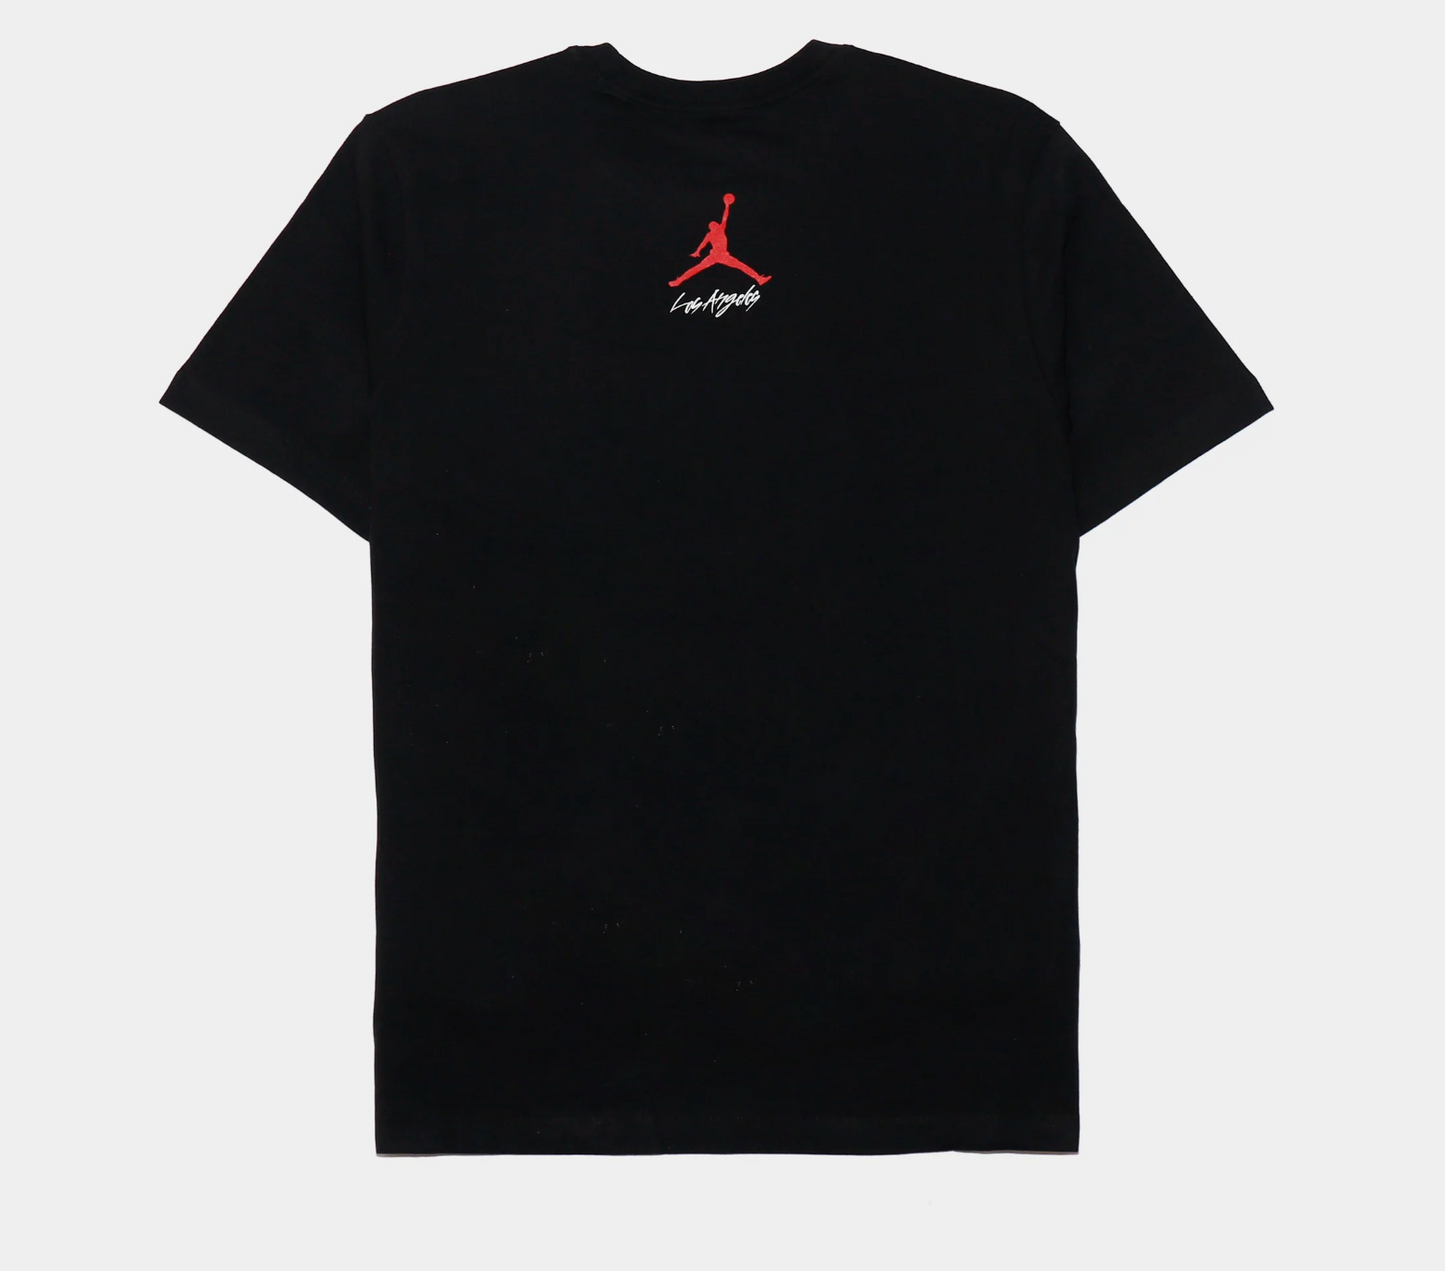 Jordan 23 Black SS T-Shirt "Los Angeles"